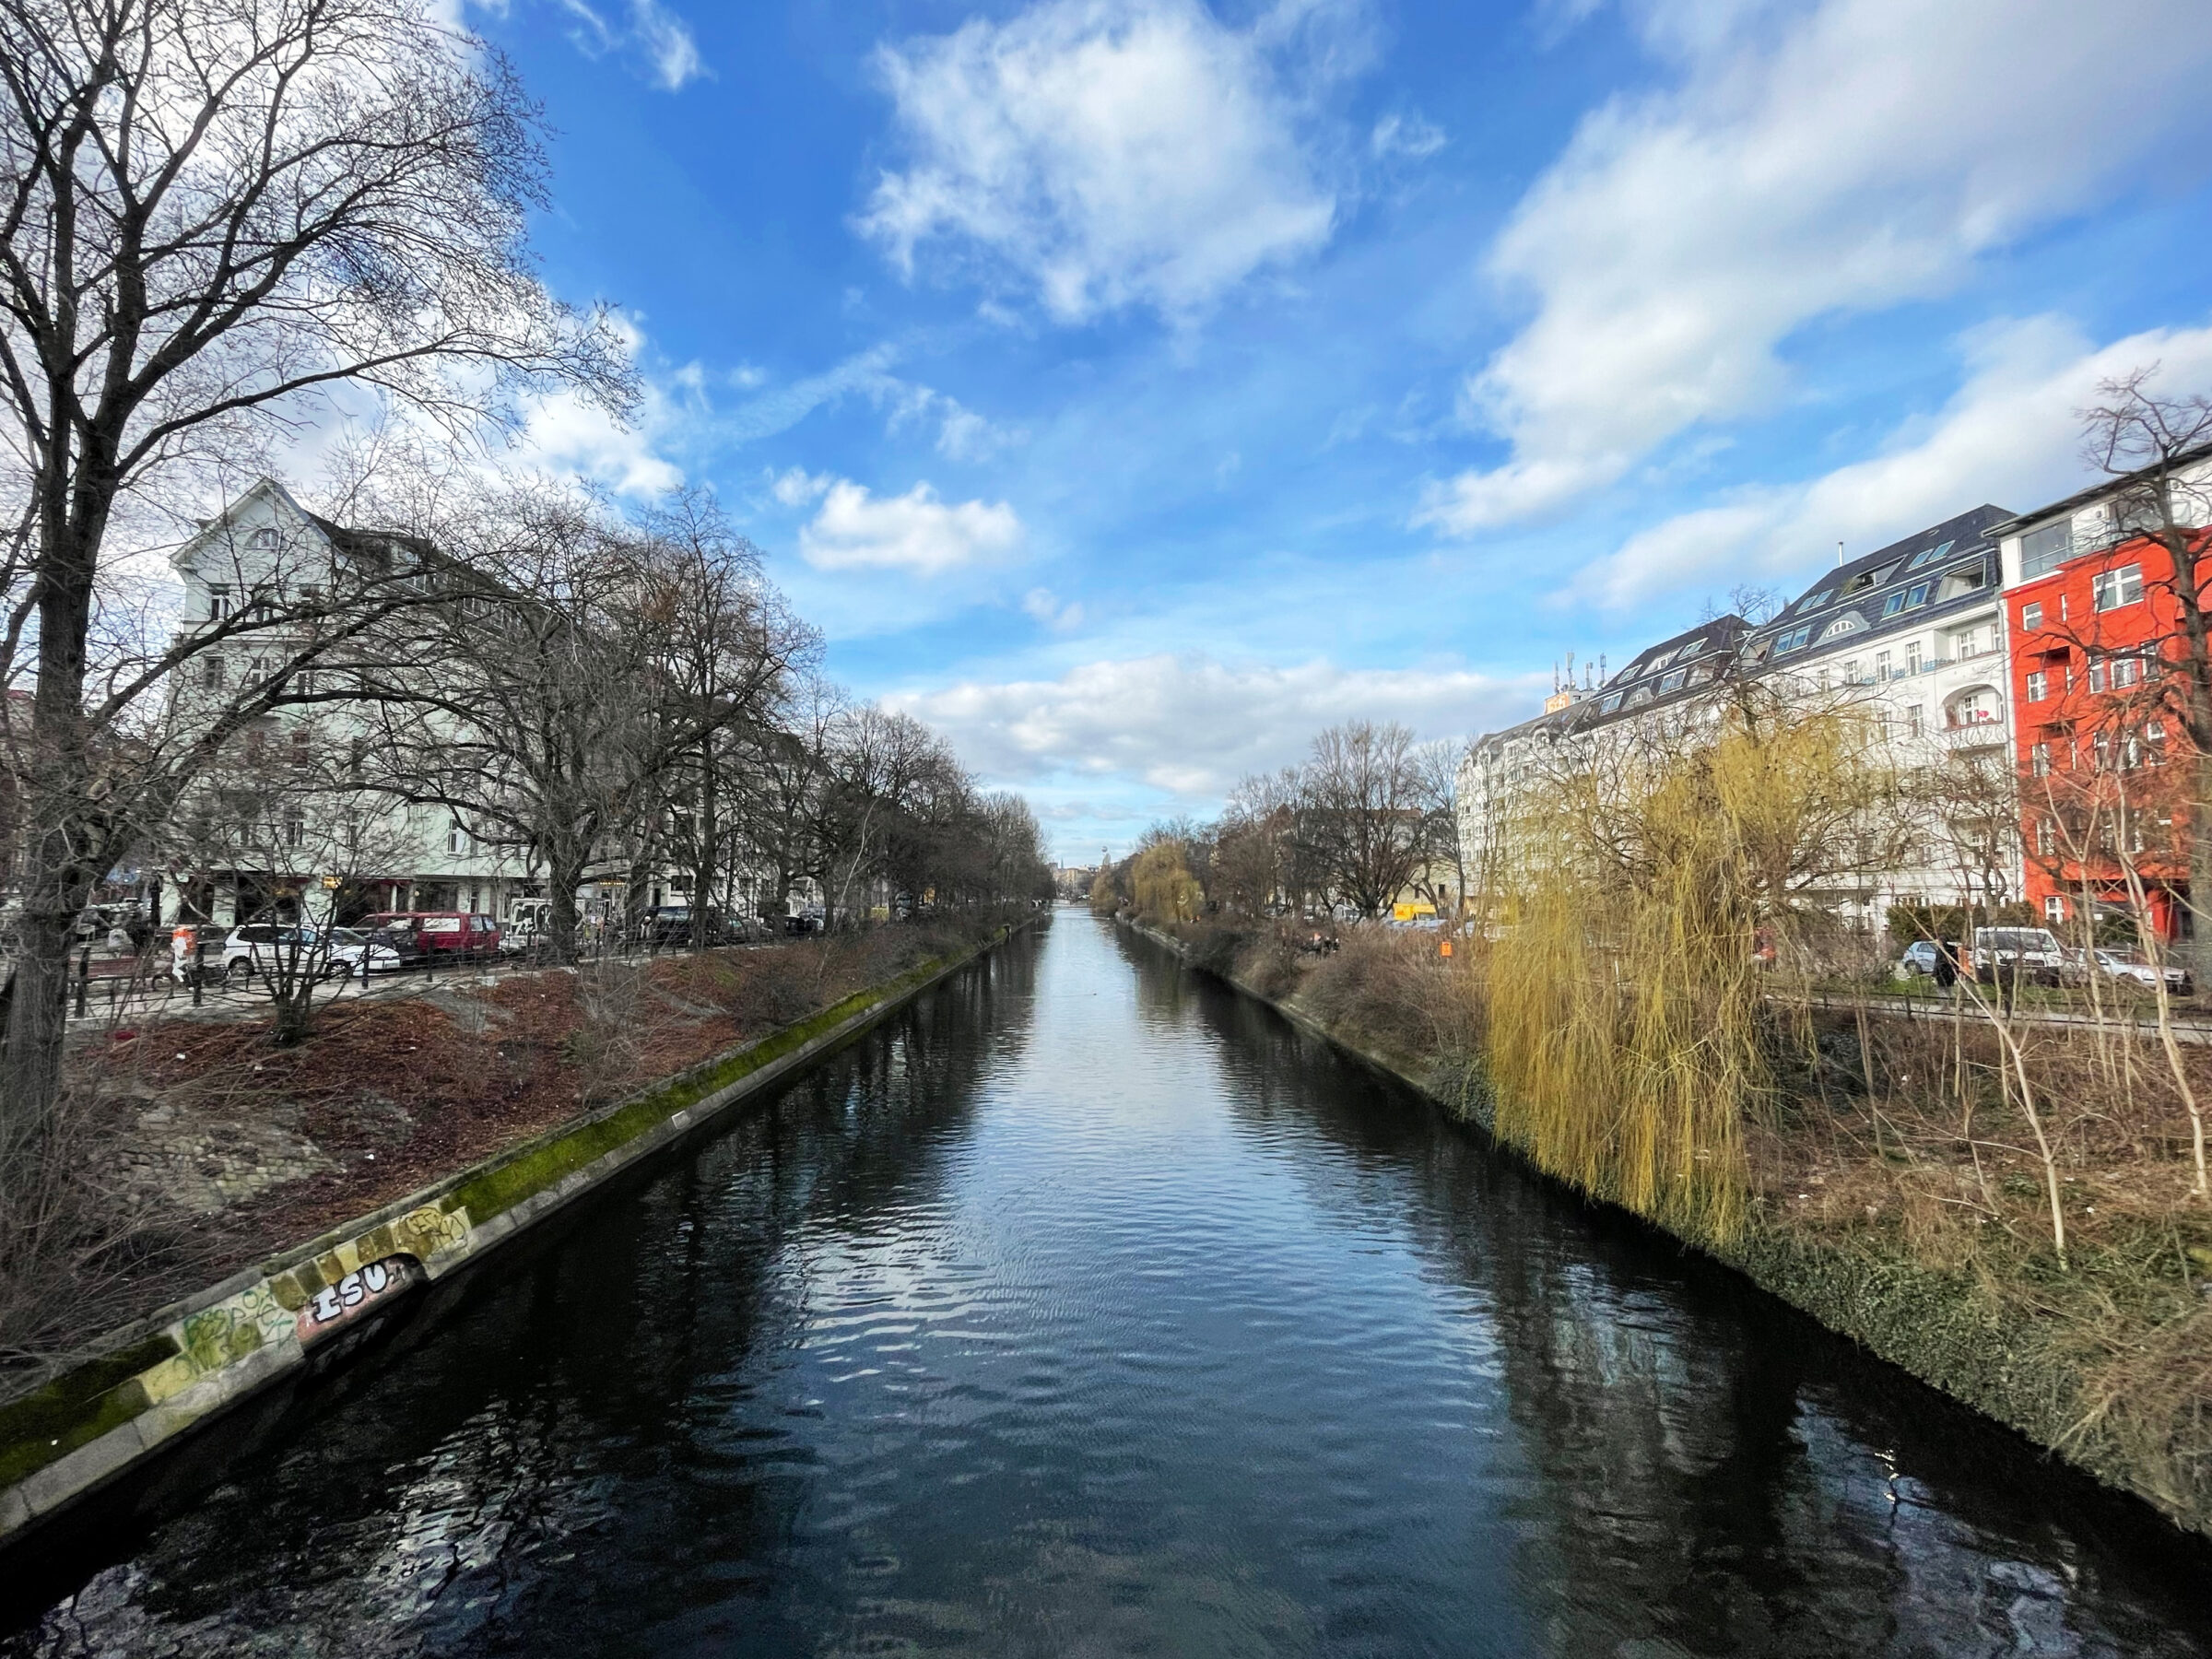 landwehrkanal tour berlin